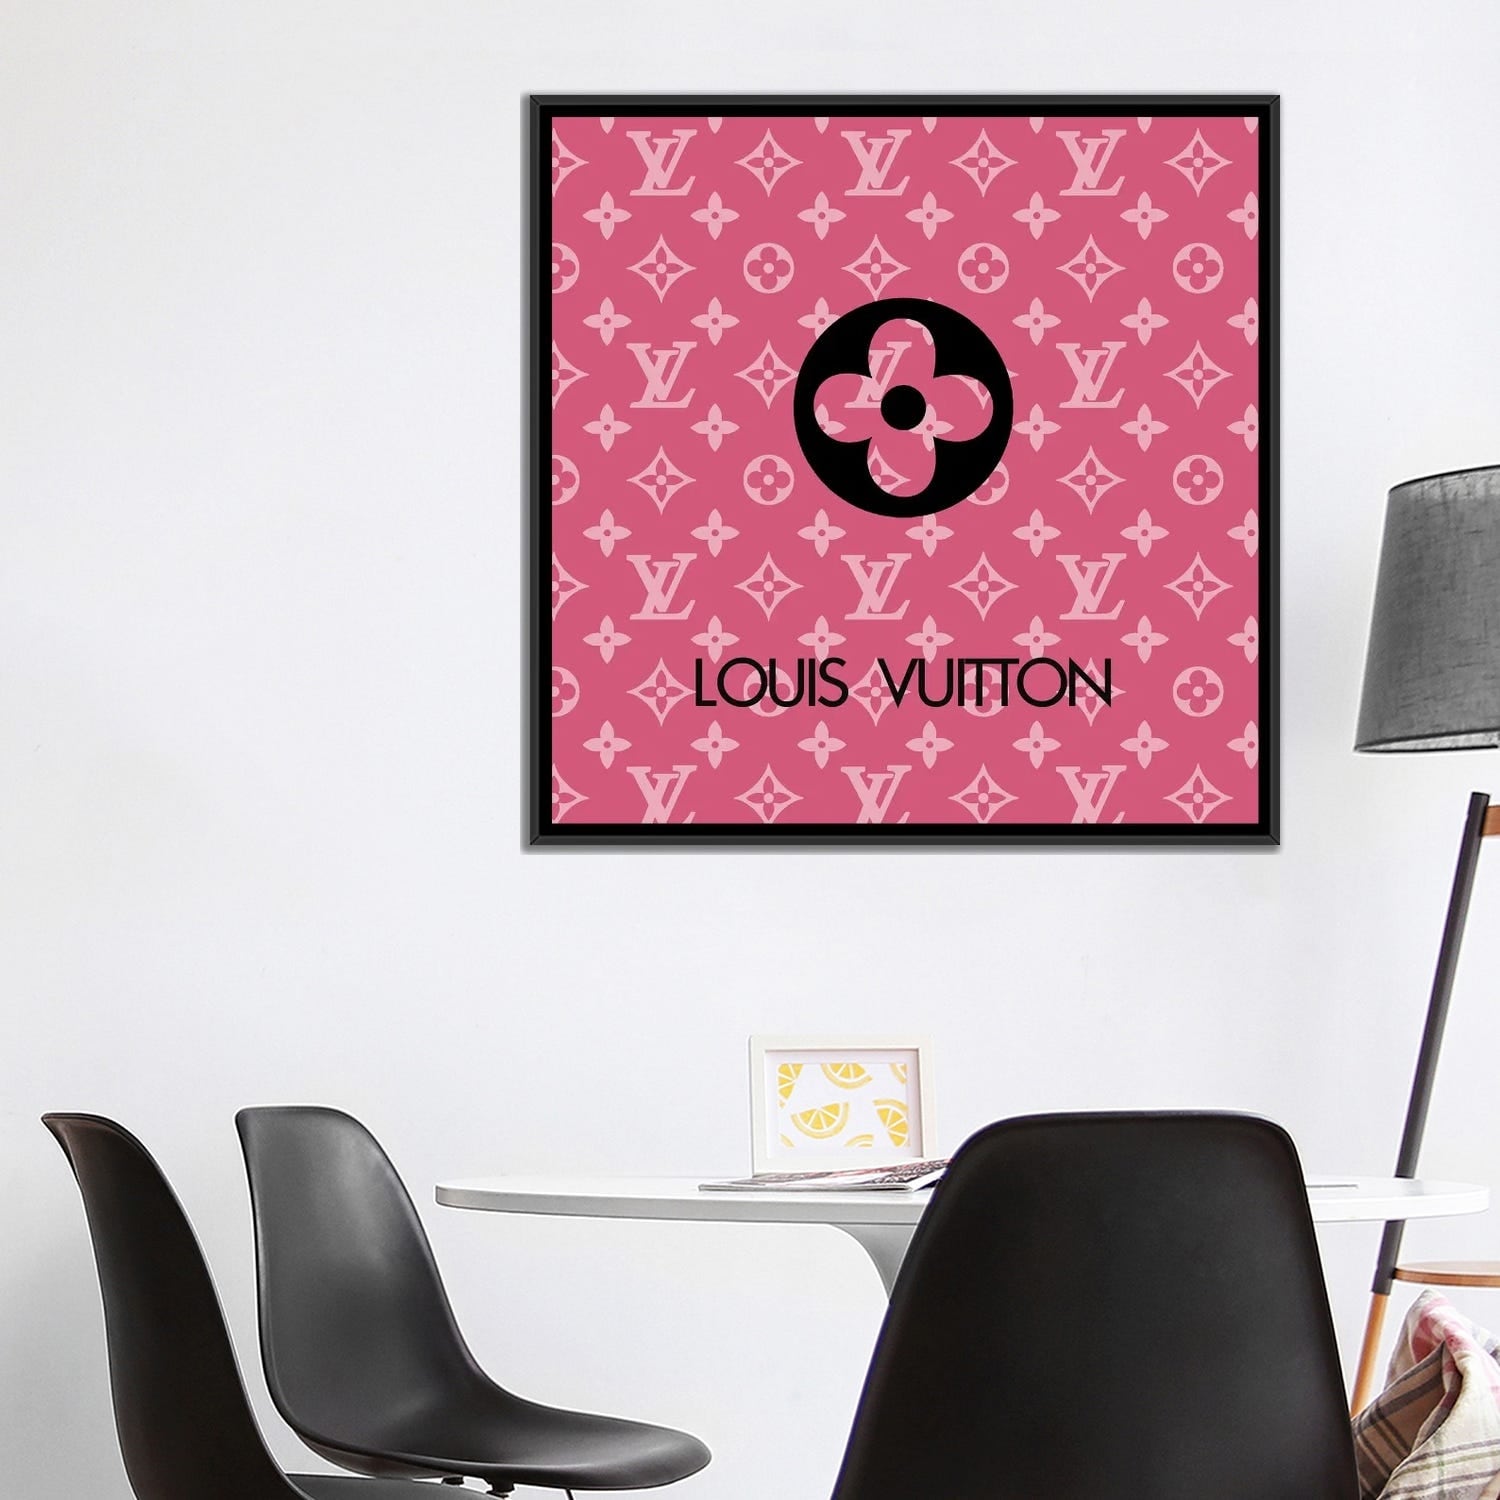 LOUIS VUITTON Pink Canvas Art Print by Art Mirano